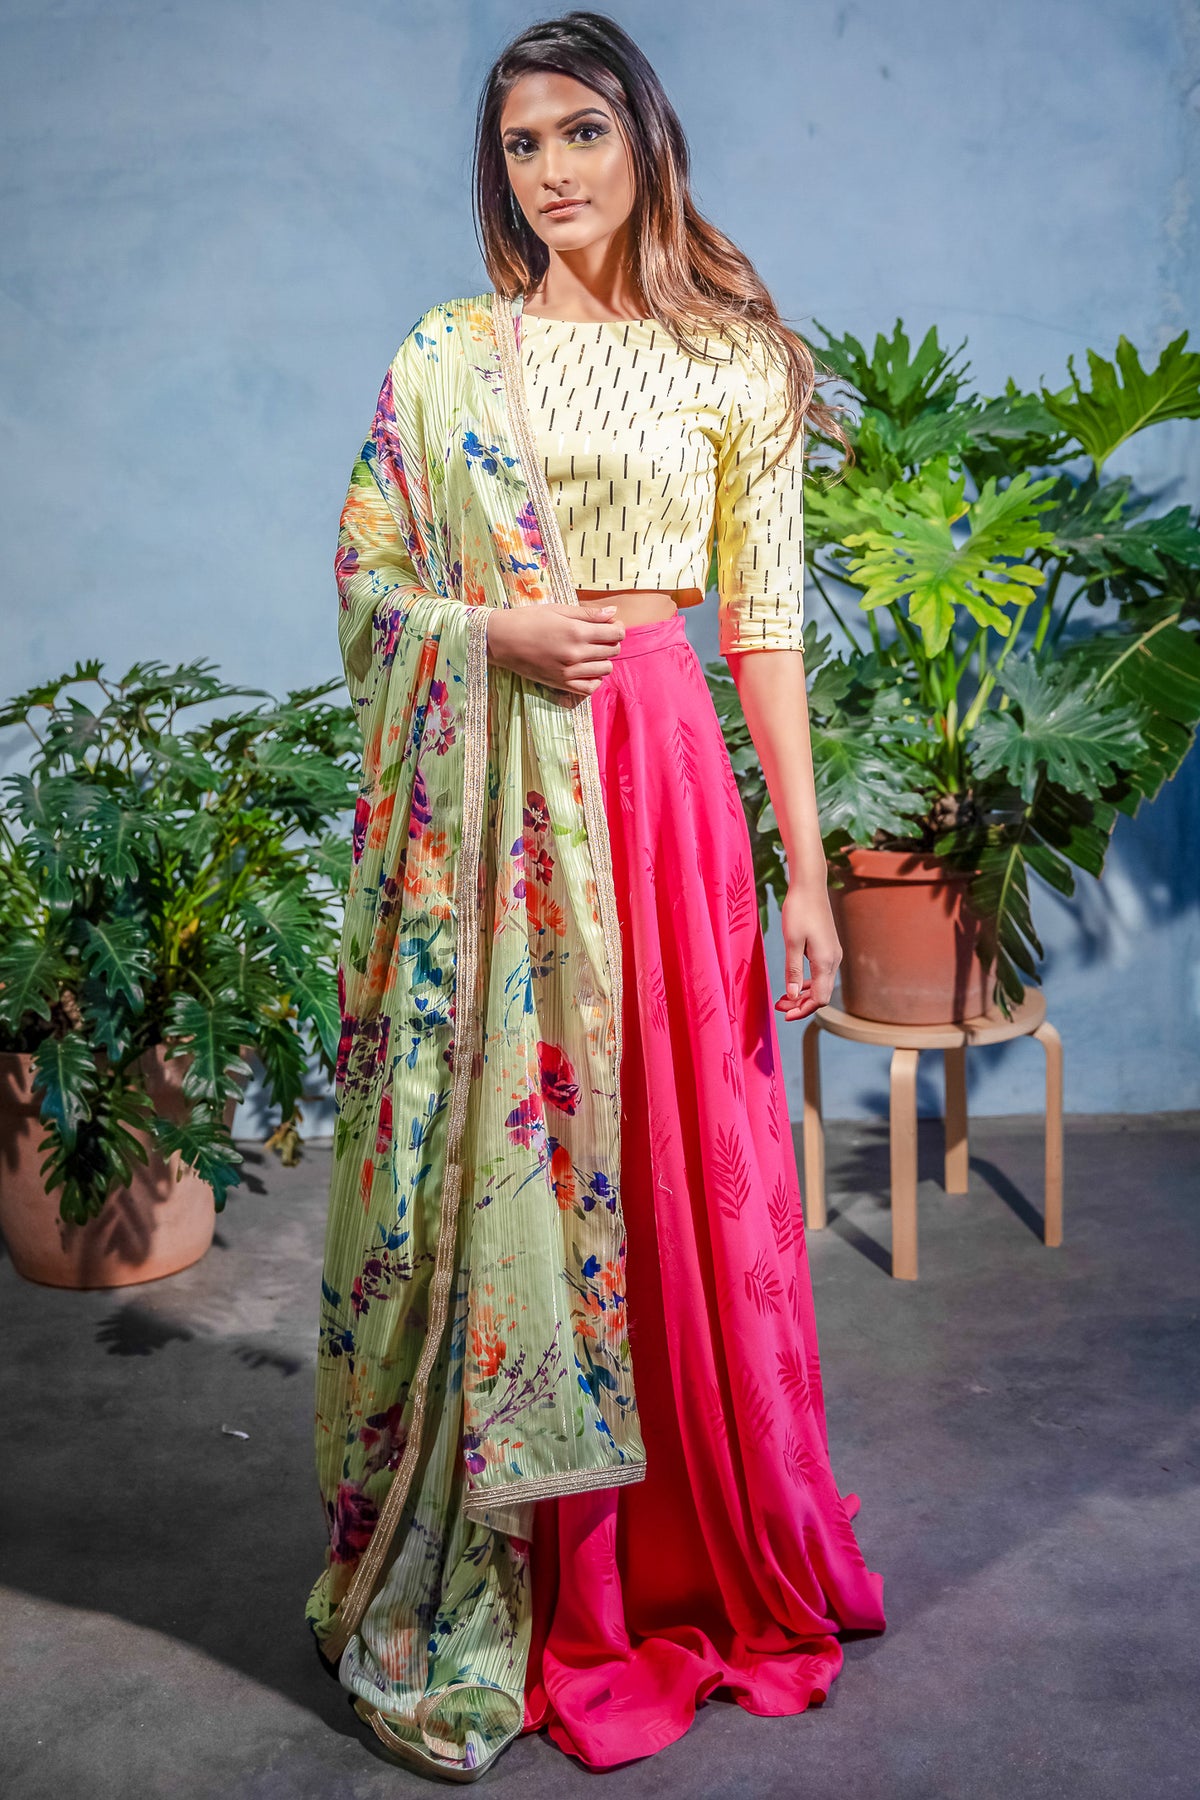 ANISHA Palm Cupro Skirt in Pink - Front View - Harleen Kaur